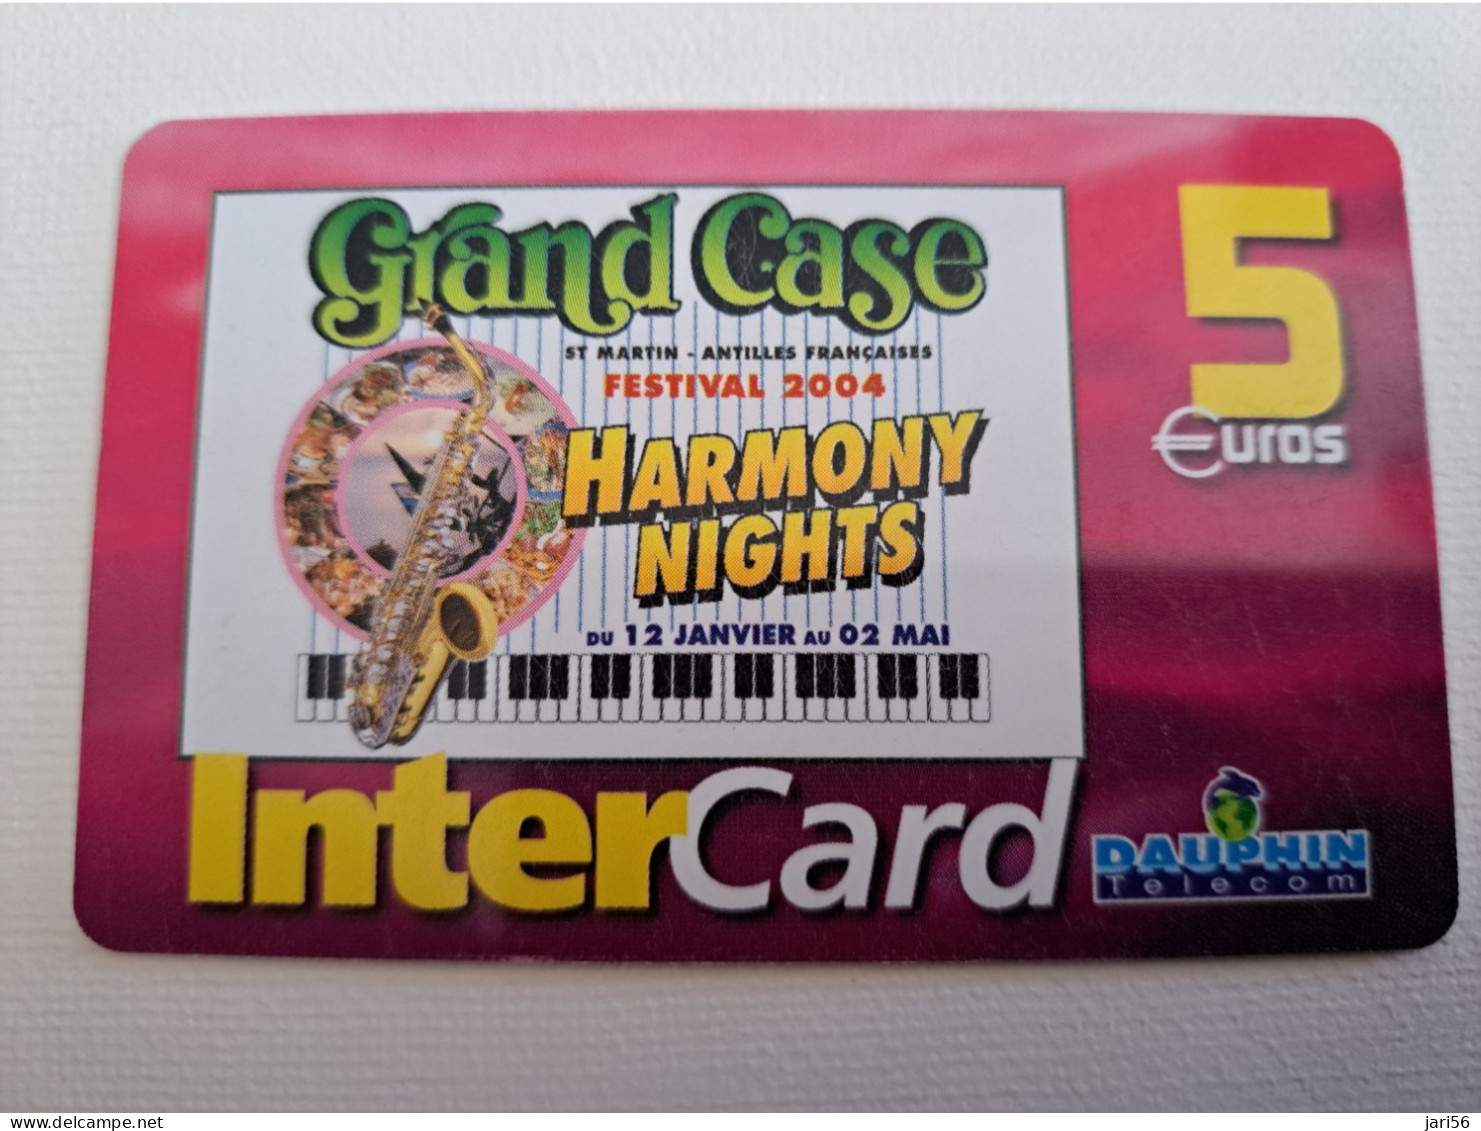 ST MARTIN / INTERCARD  5 EURO  HARMONY  NIGHTS        NO 083   Fine Used Card    ** 15141 ** - Antillen (Frans)